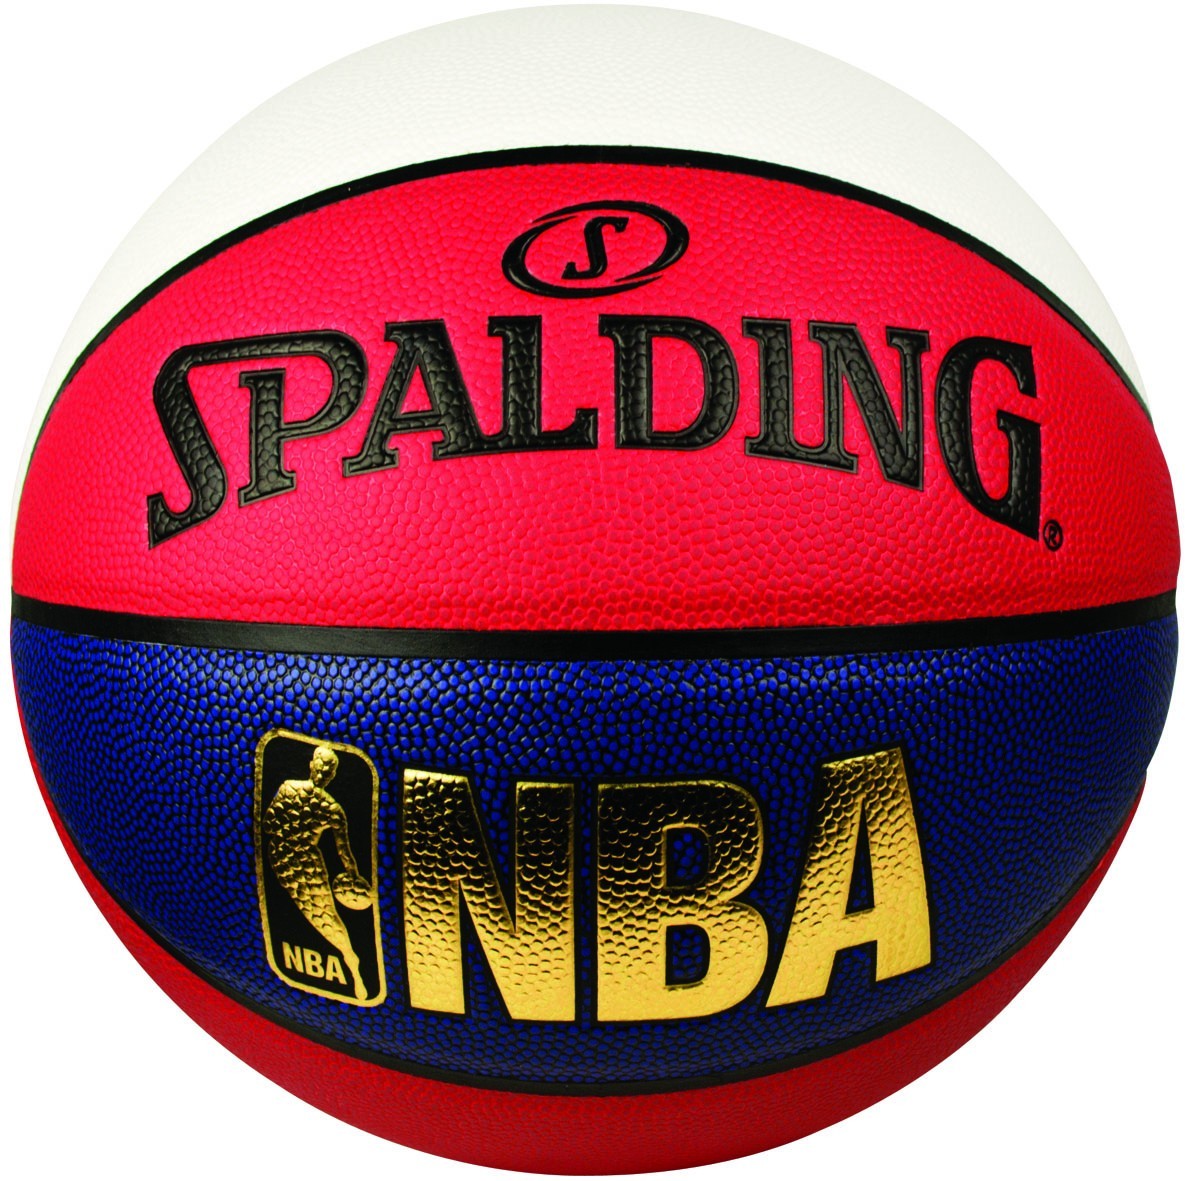 Spalding NBA Logoman Indoor/Outdoor Basketball [Size: 7]